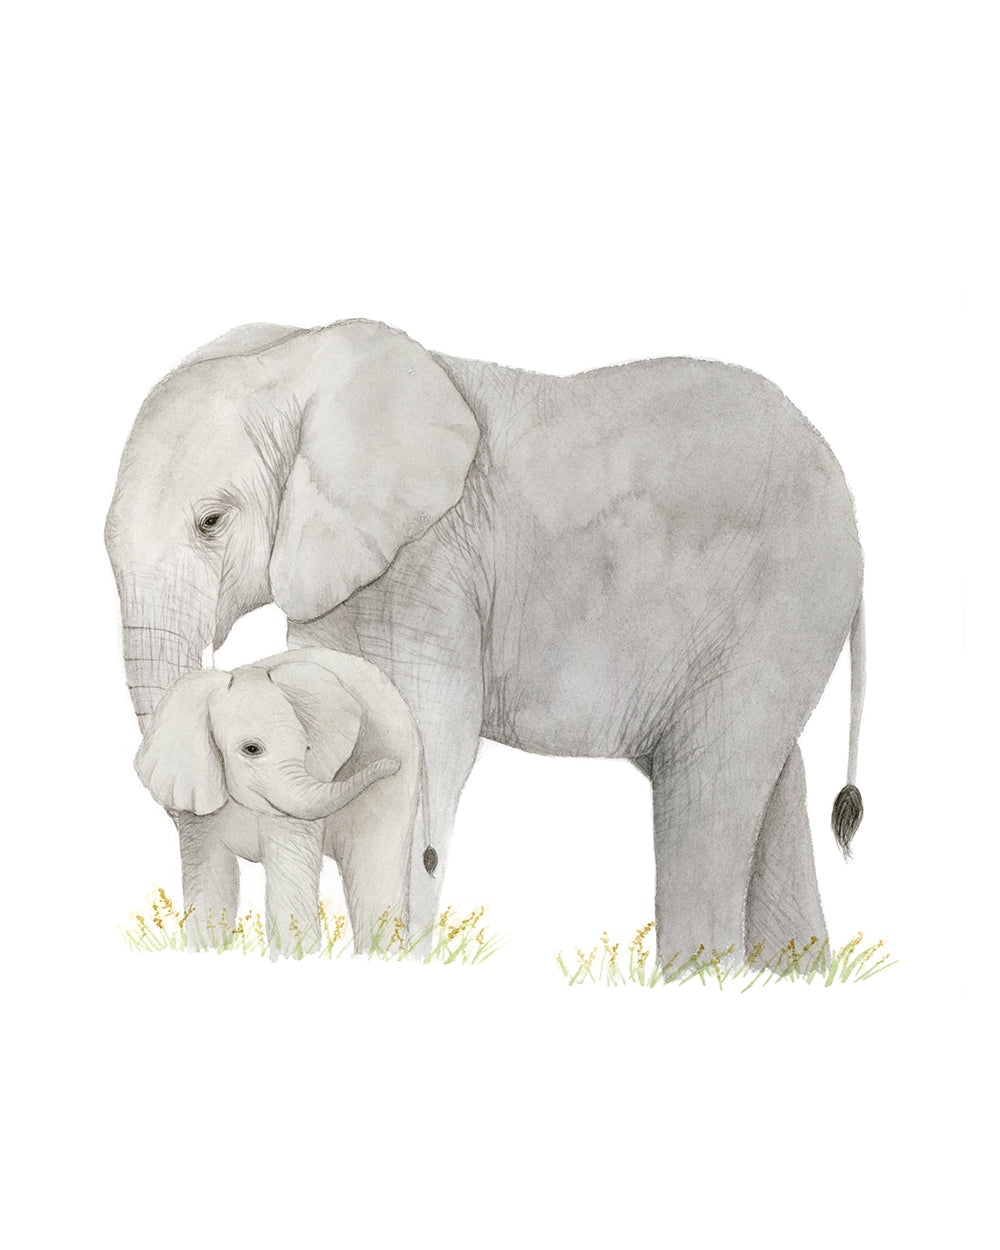 Elephant Watercolor Painting - Art Print